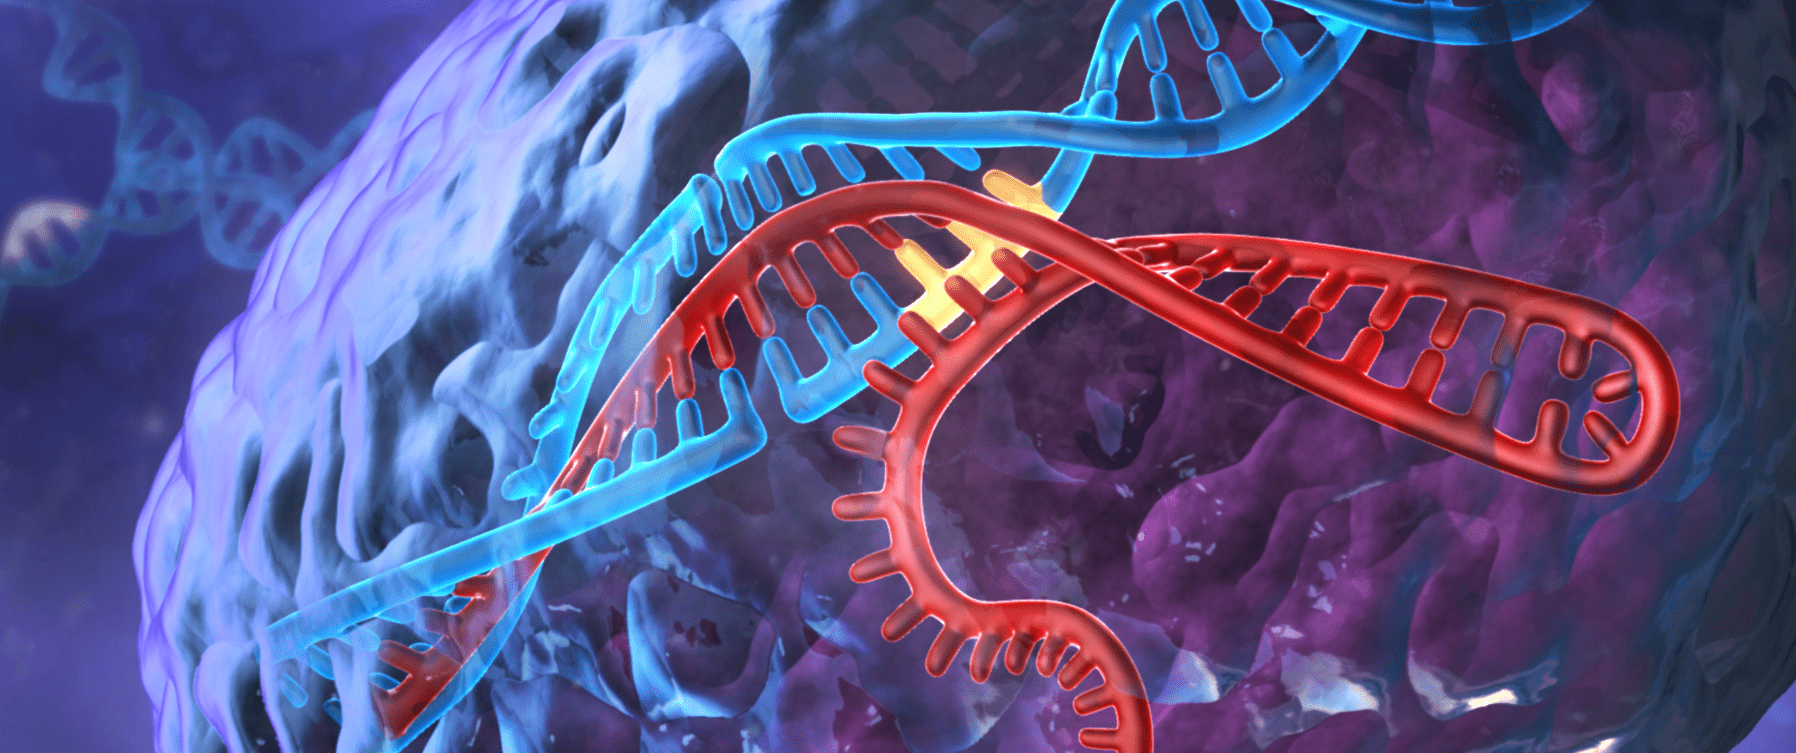 Cartoon depiction of DNA